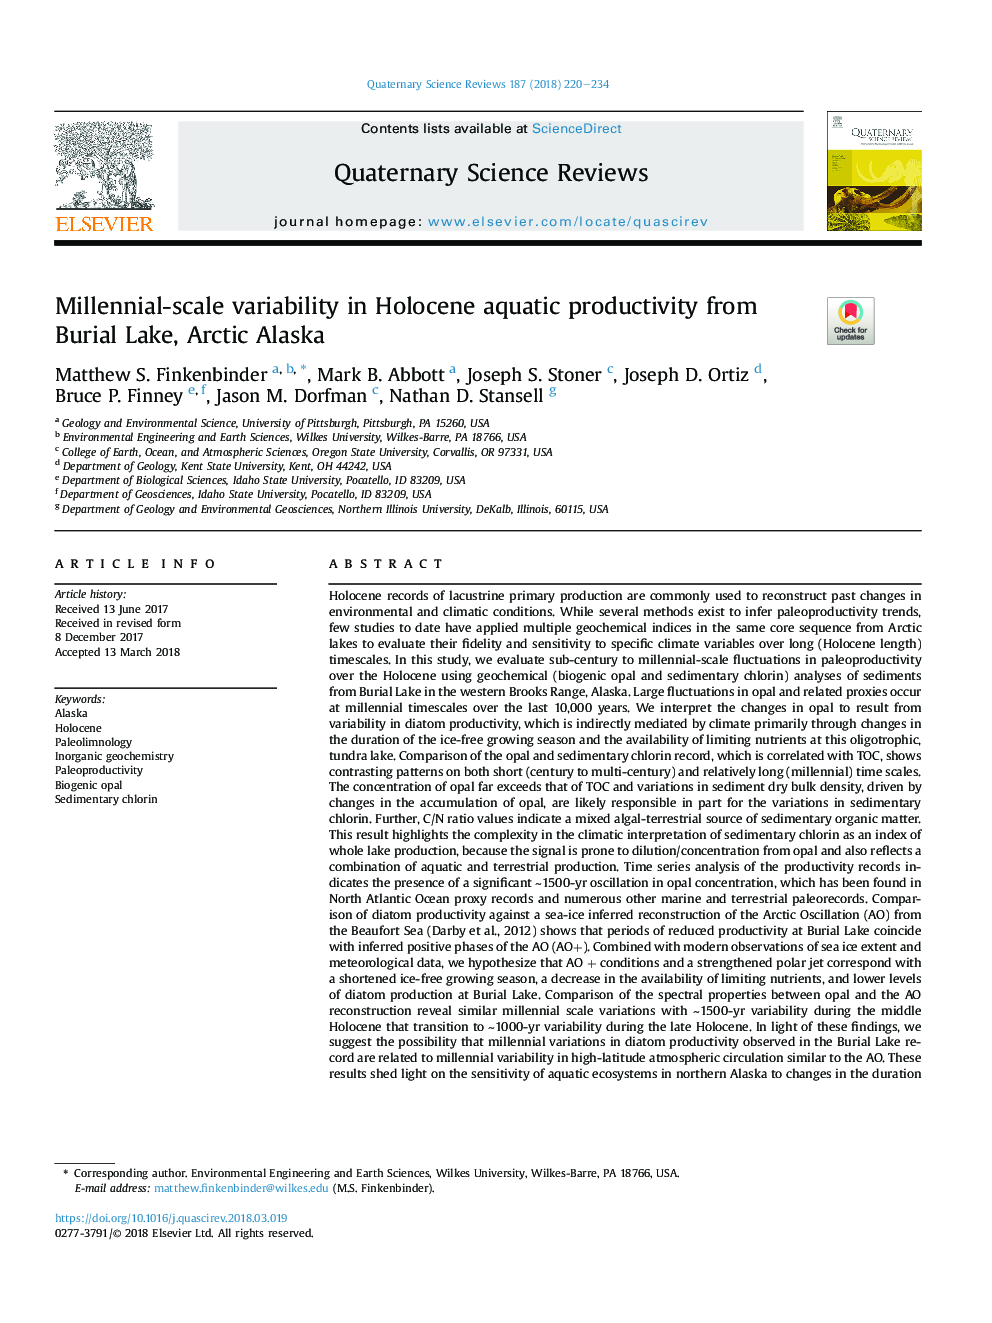 Millennial-scale variability in Holocene aquatic productivity from Burial Lake, Arctic Alaska